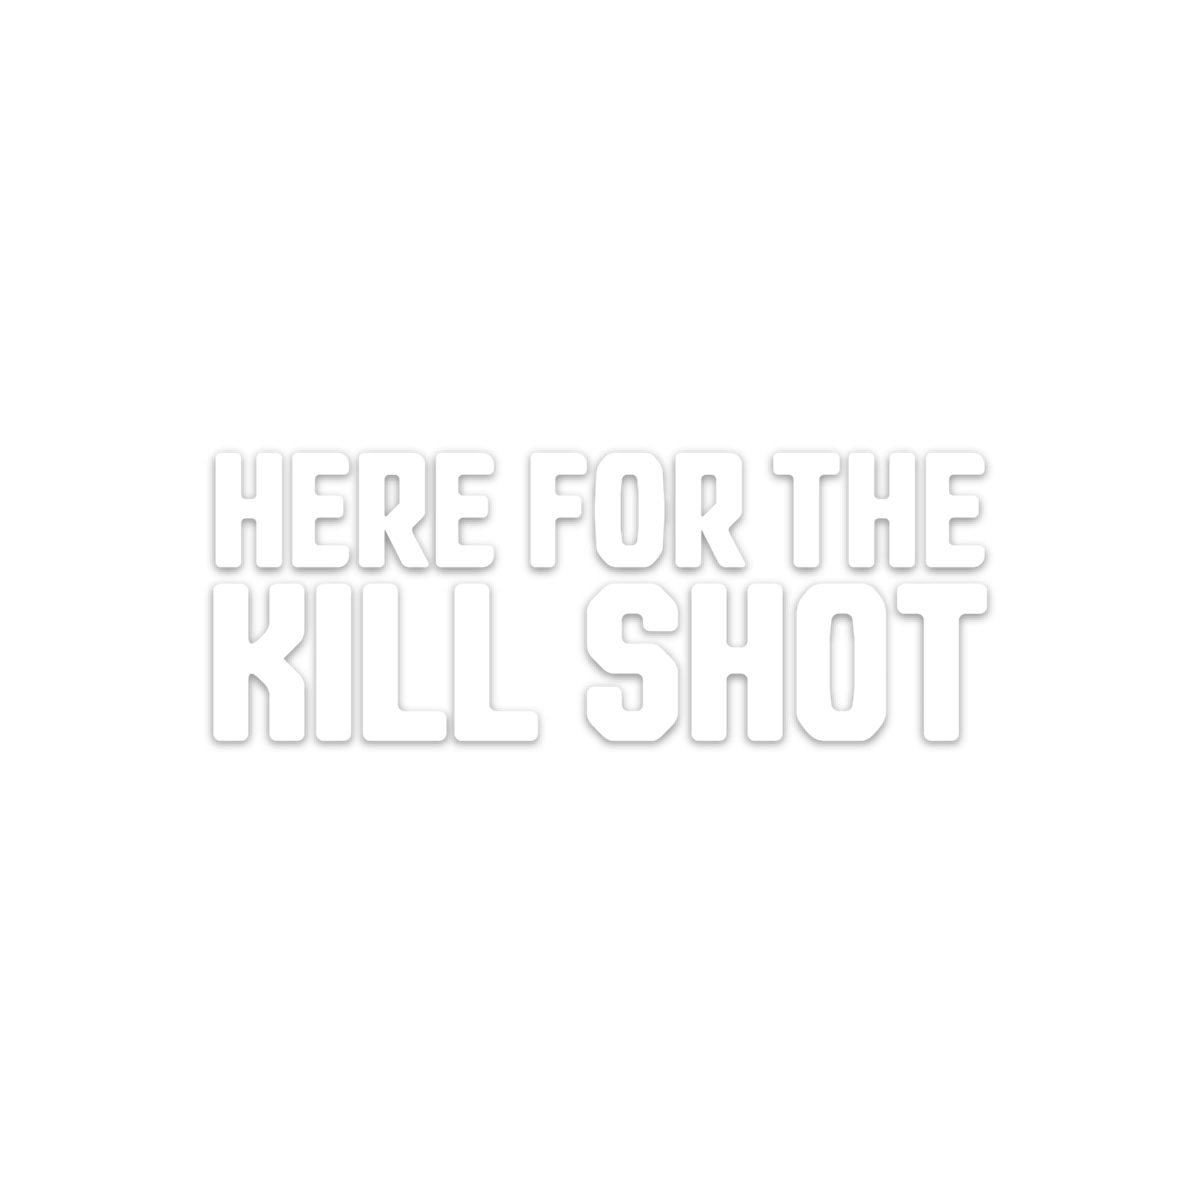 Kill Shot Decal